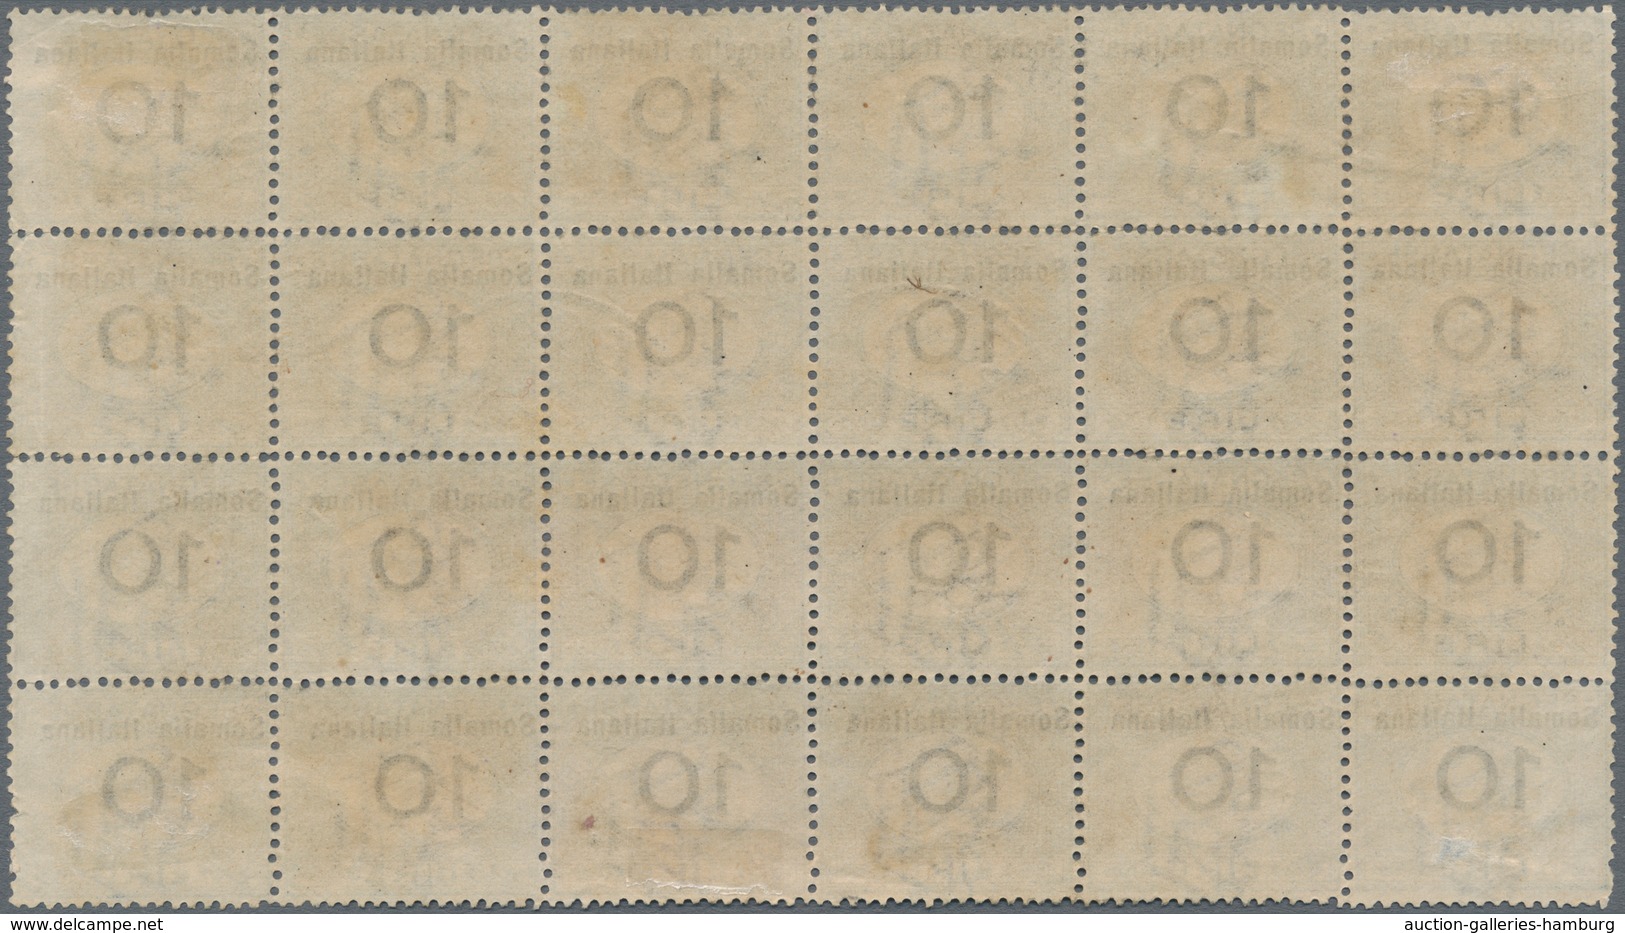 Italienisch-Somaliland - Portomarken: 1926, Postage Due 2 Lire Block Of 15 And 10 Lire Block Of 24 A - Somalia